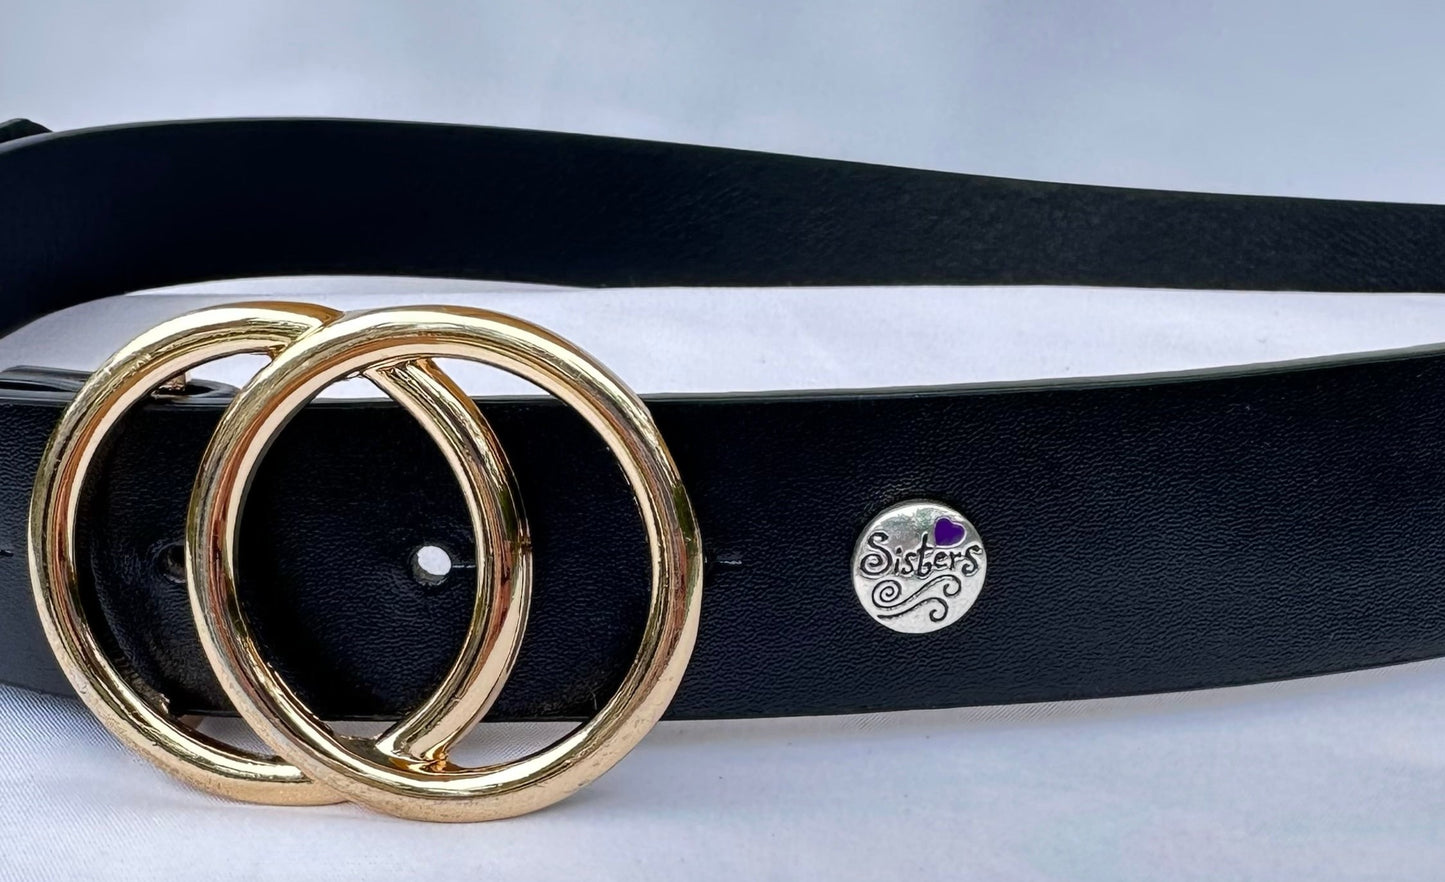 Sisters Belt and Bag Charm Purple